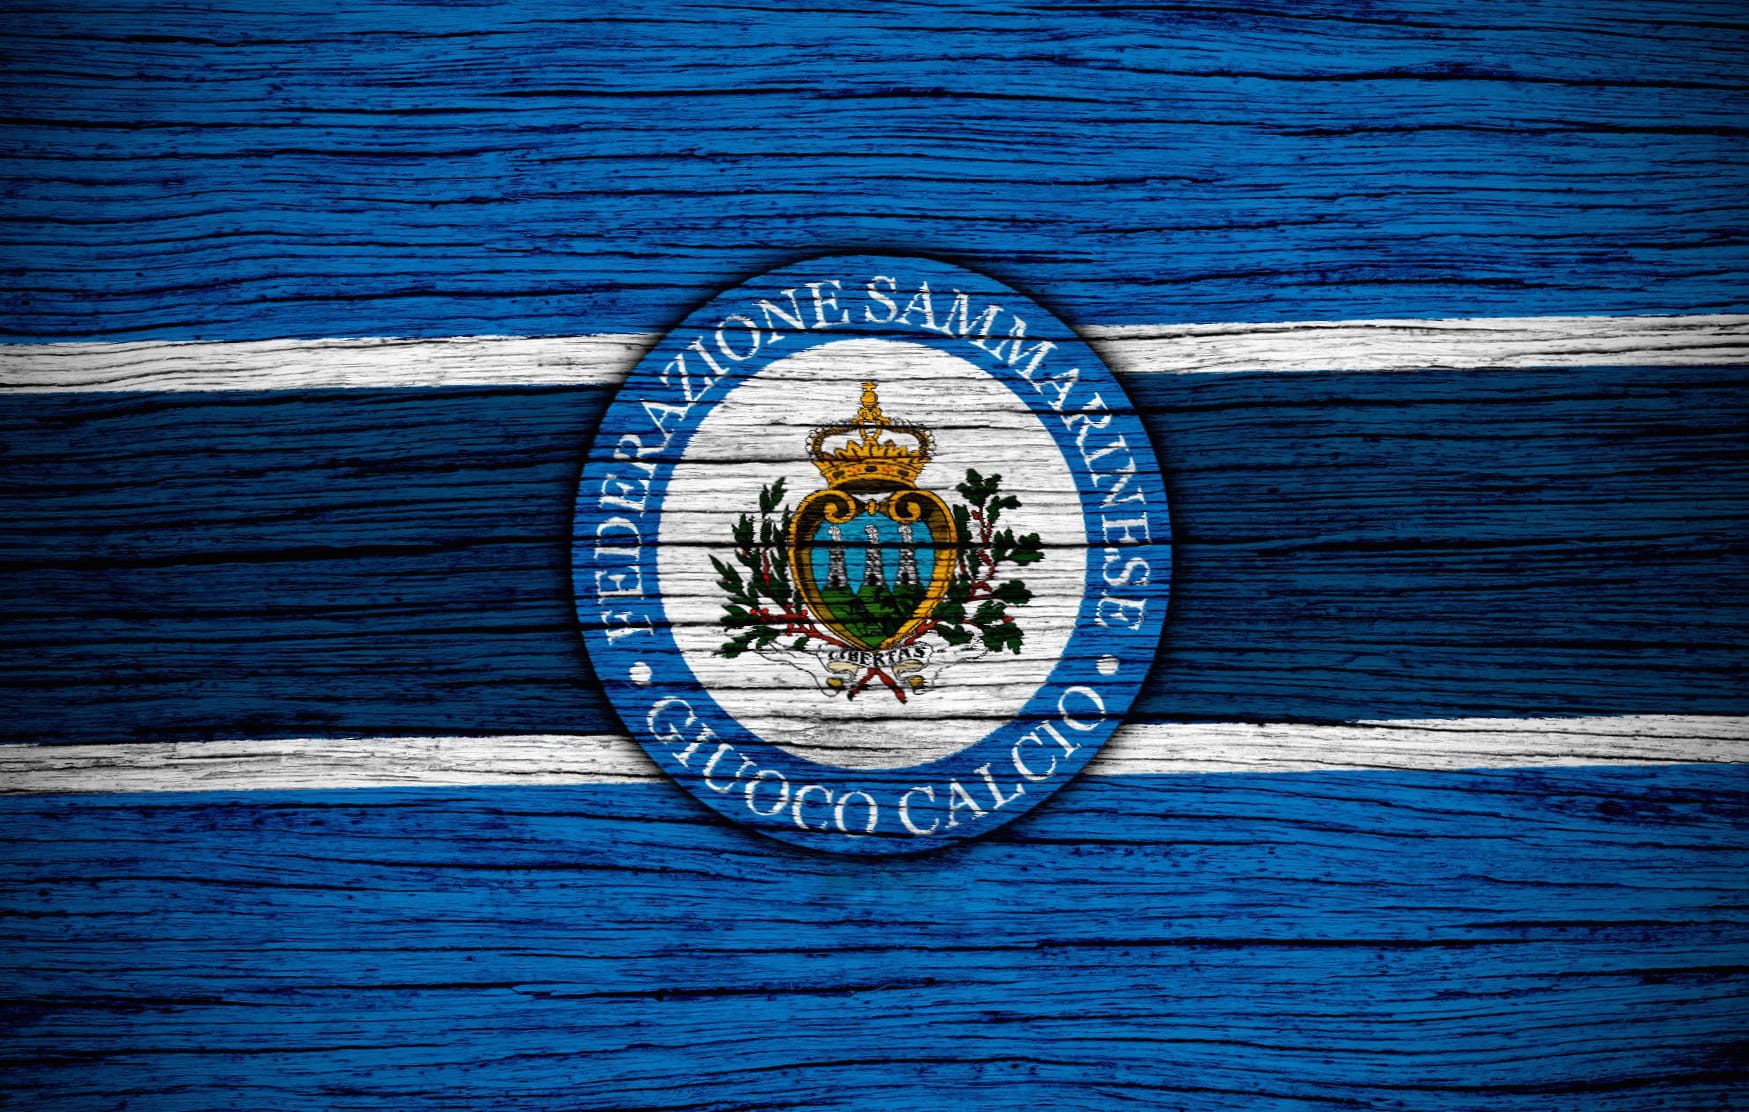 San Marino National Football Team at 2048 x 2048 iPad size wallpapers HD quality